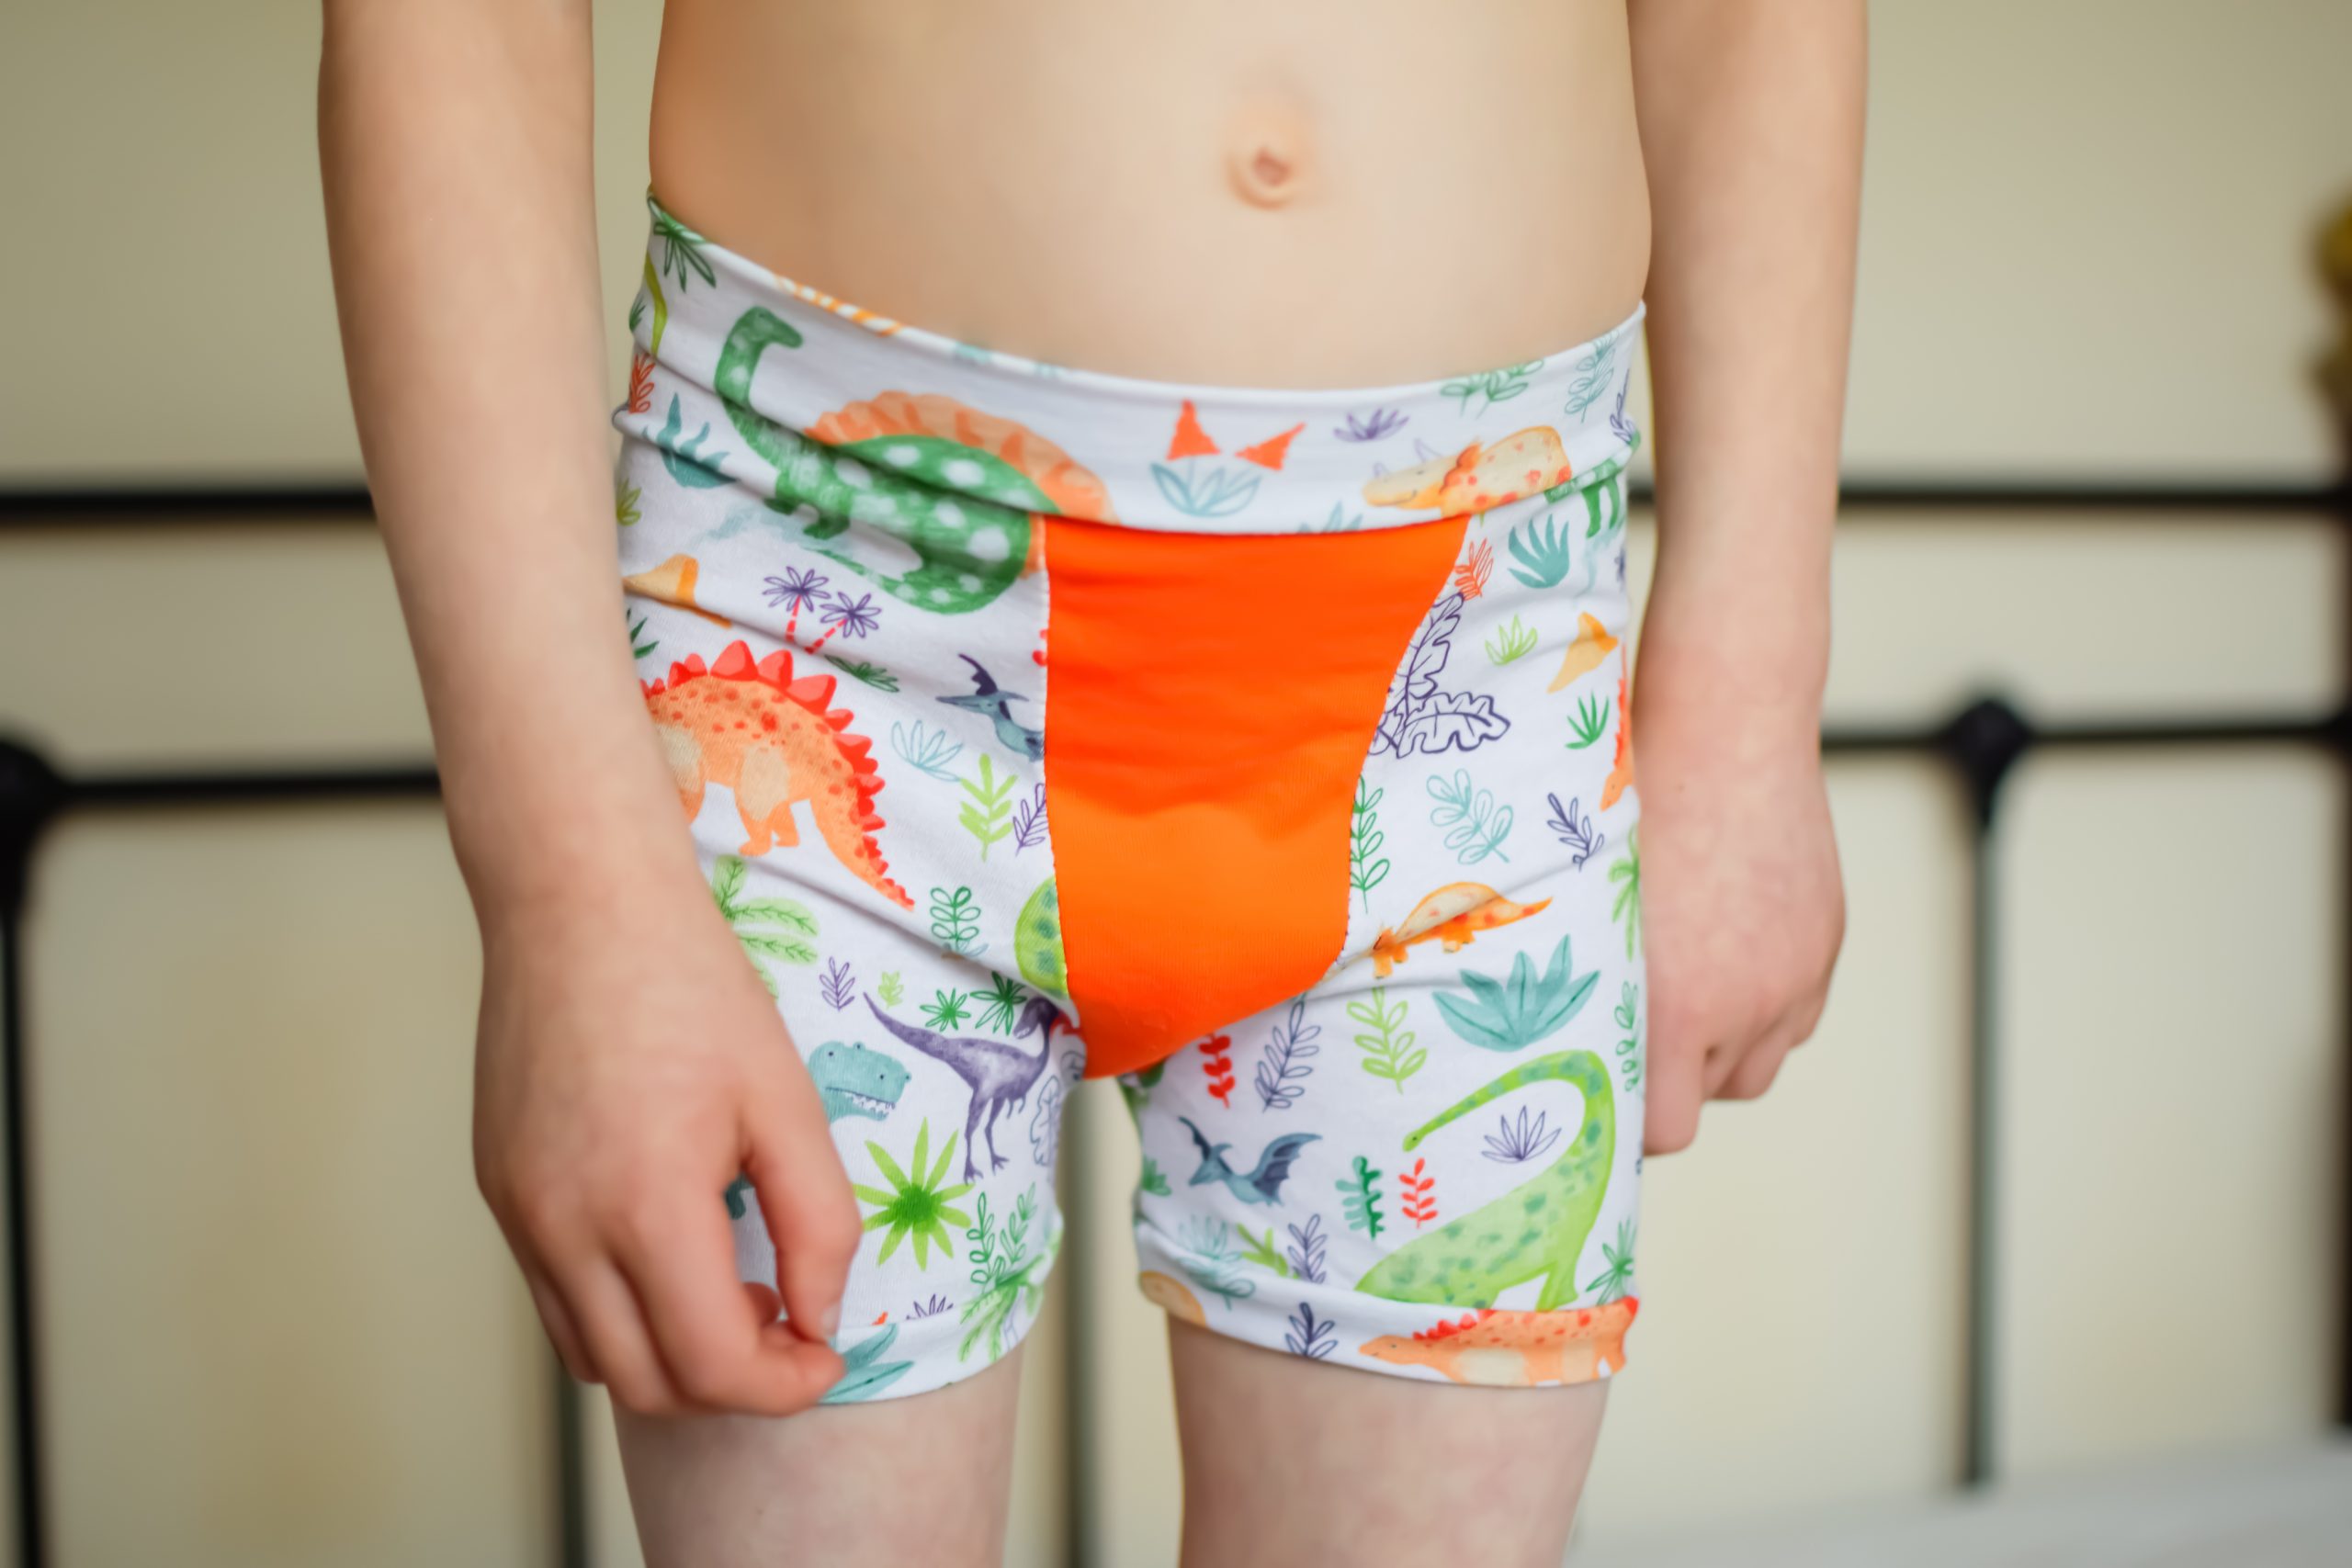 Petits D'om Child/Teen Wiz Panties - The Fold Line